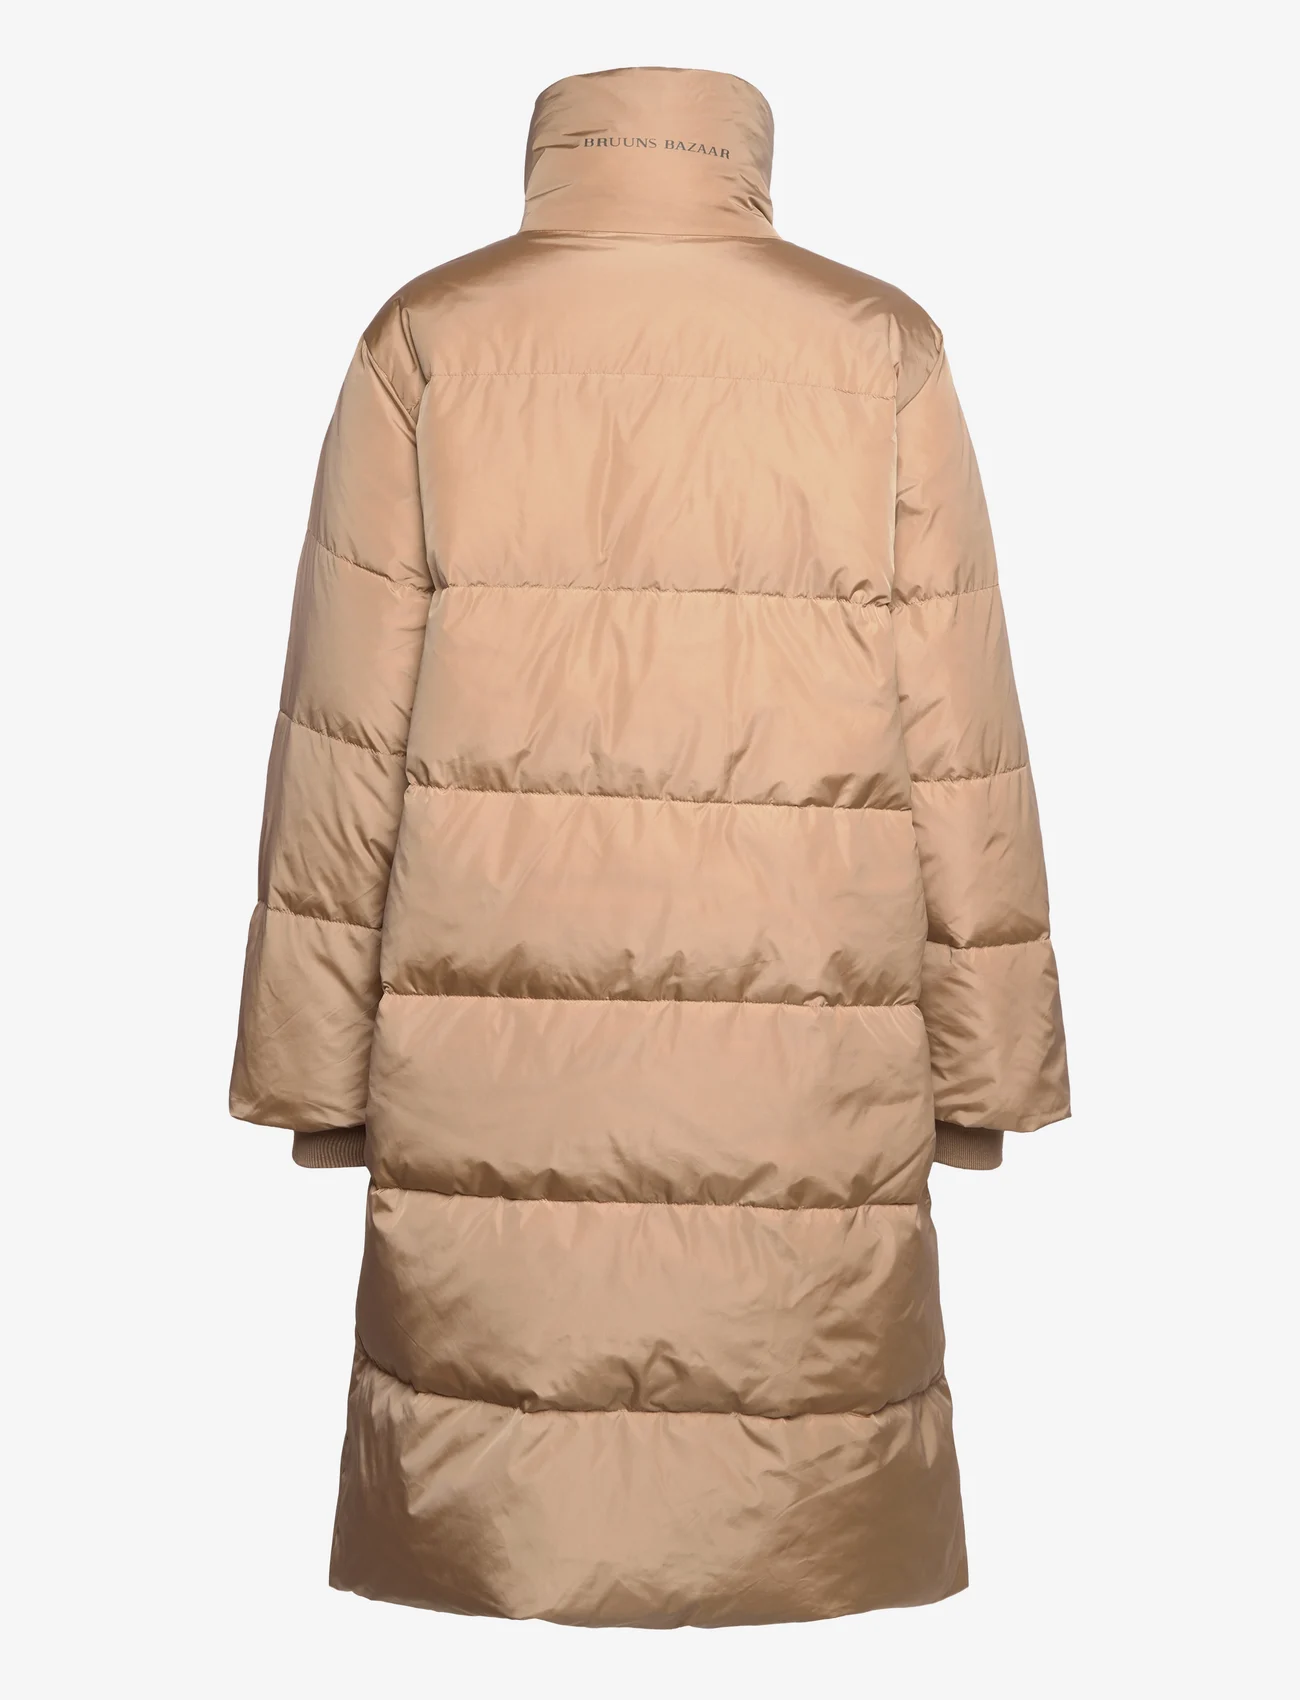 Bruuns Bazaar - DownBBLucky coat - winter jackets - dijon - 1